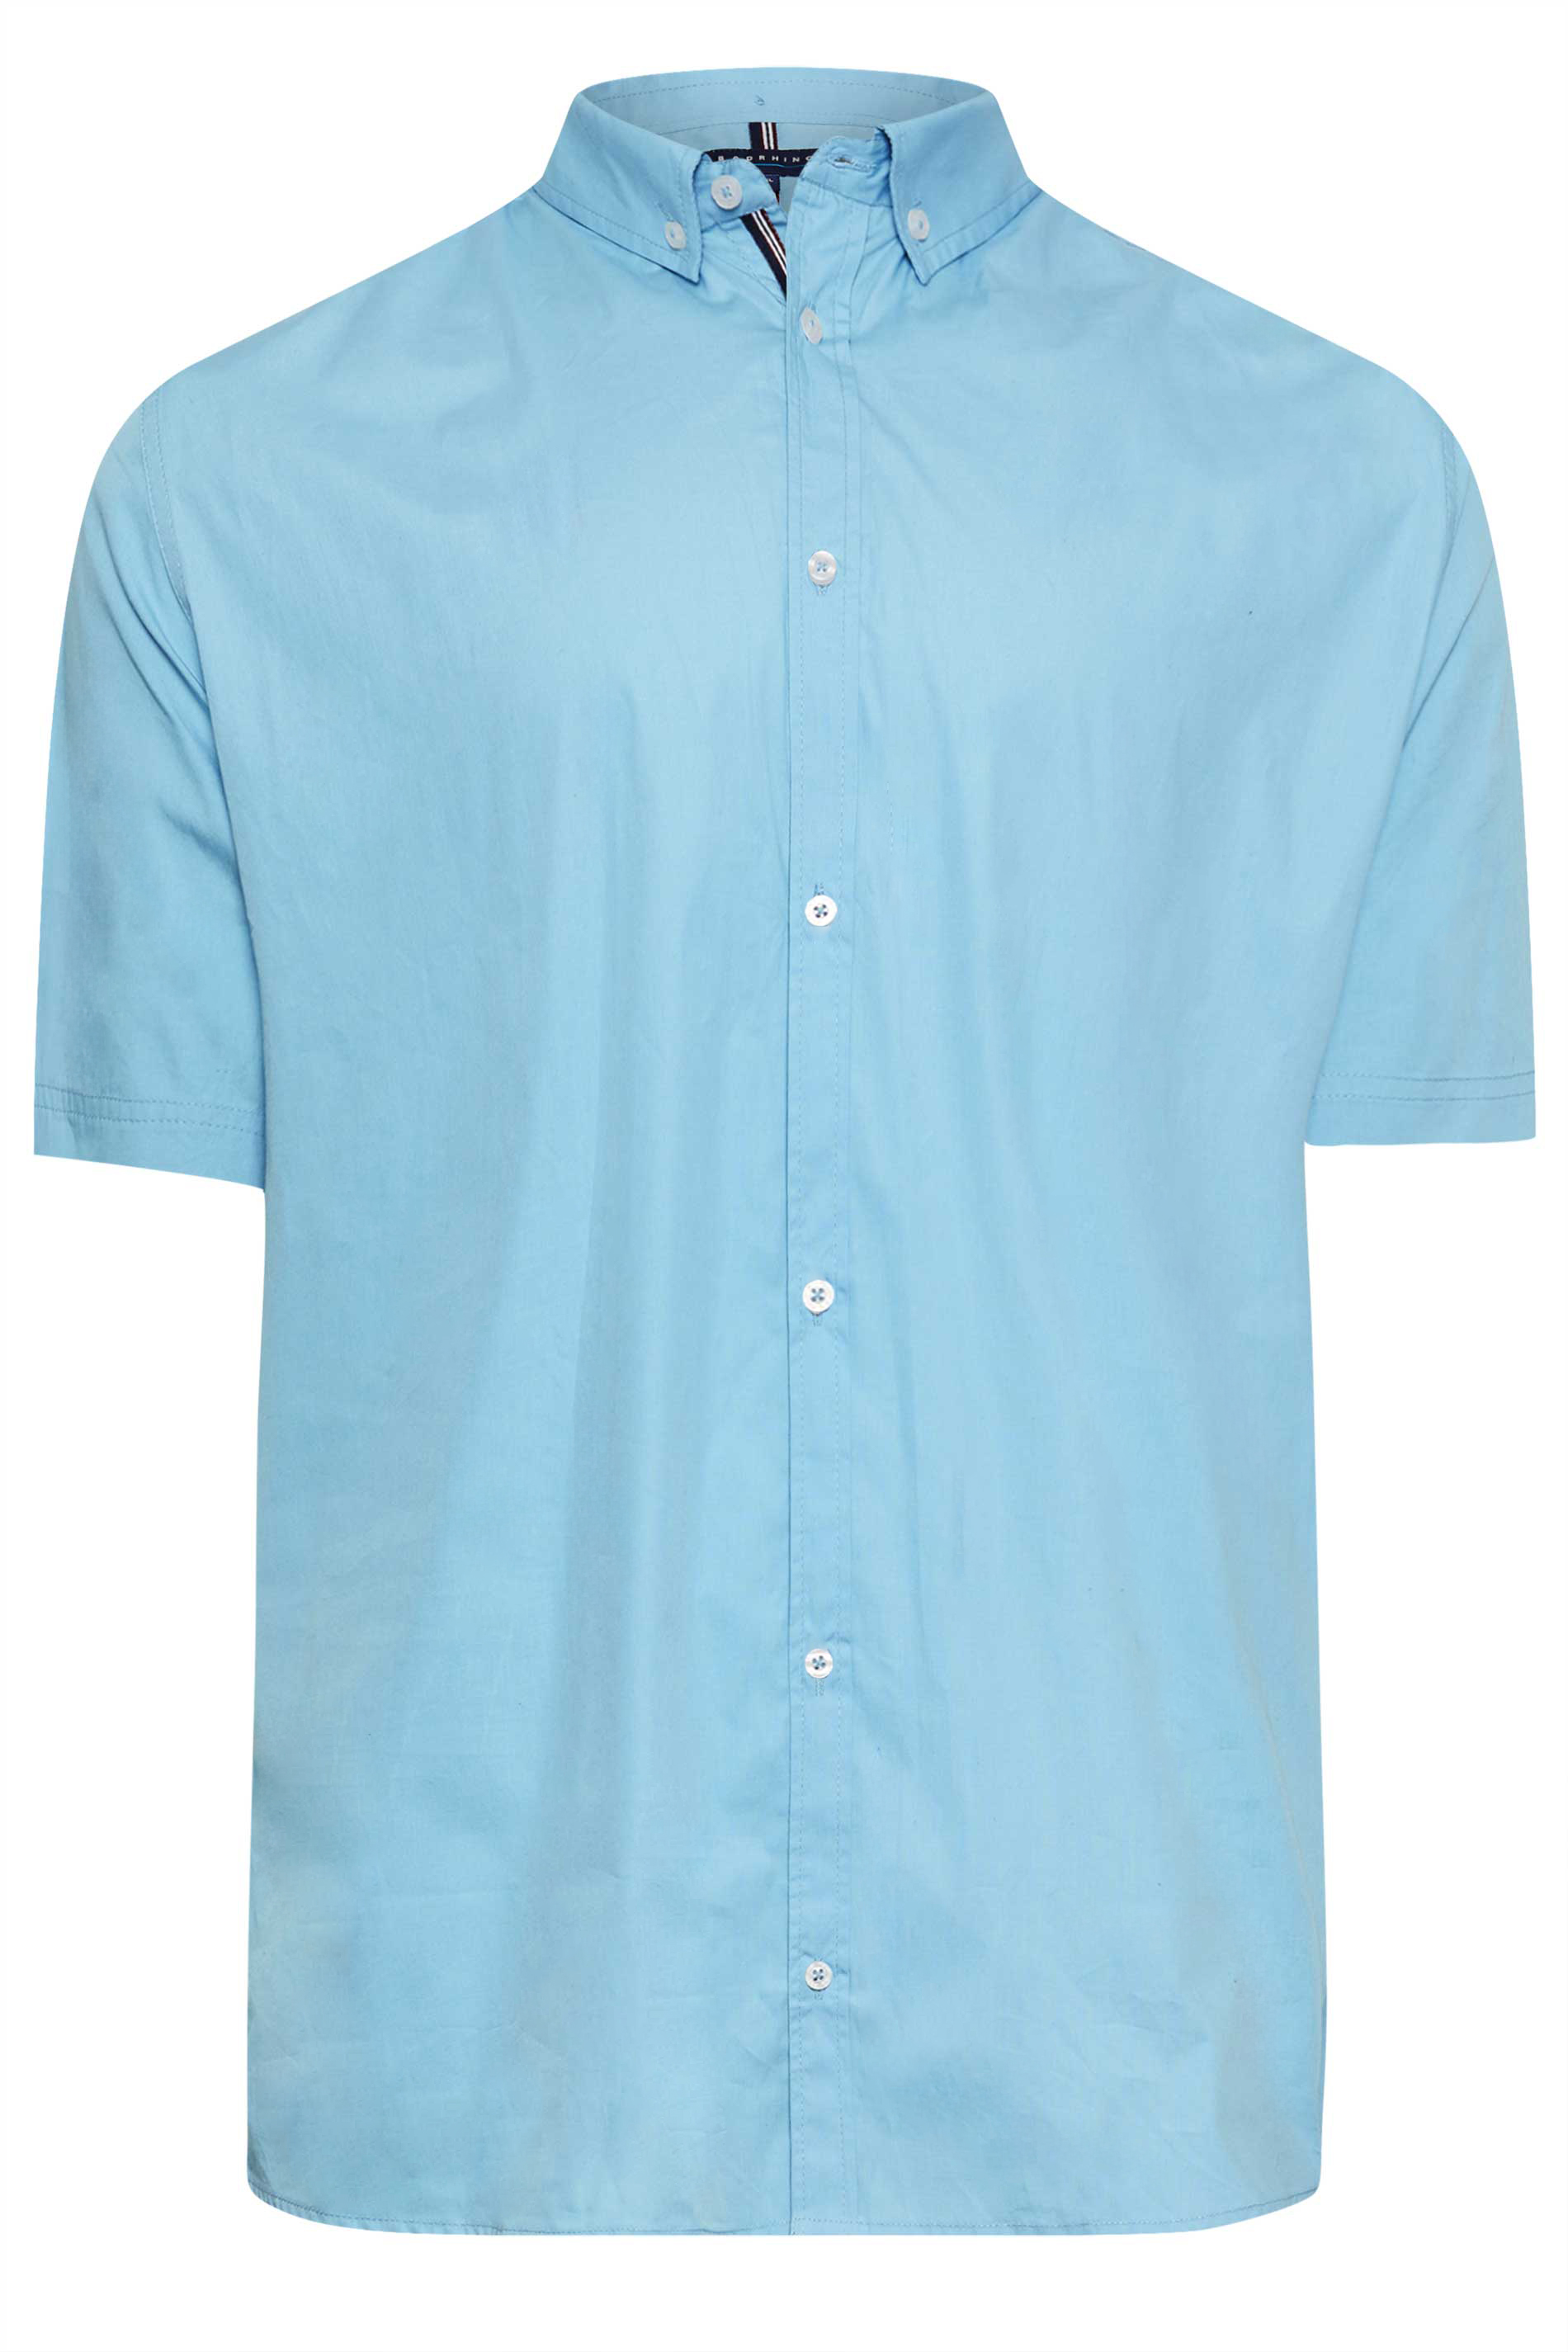 BadRhino Big & Tall Light Blue Poplin Shirt | BadRhino 2